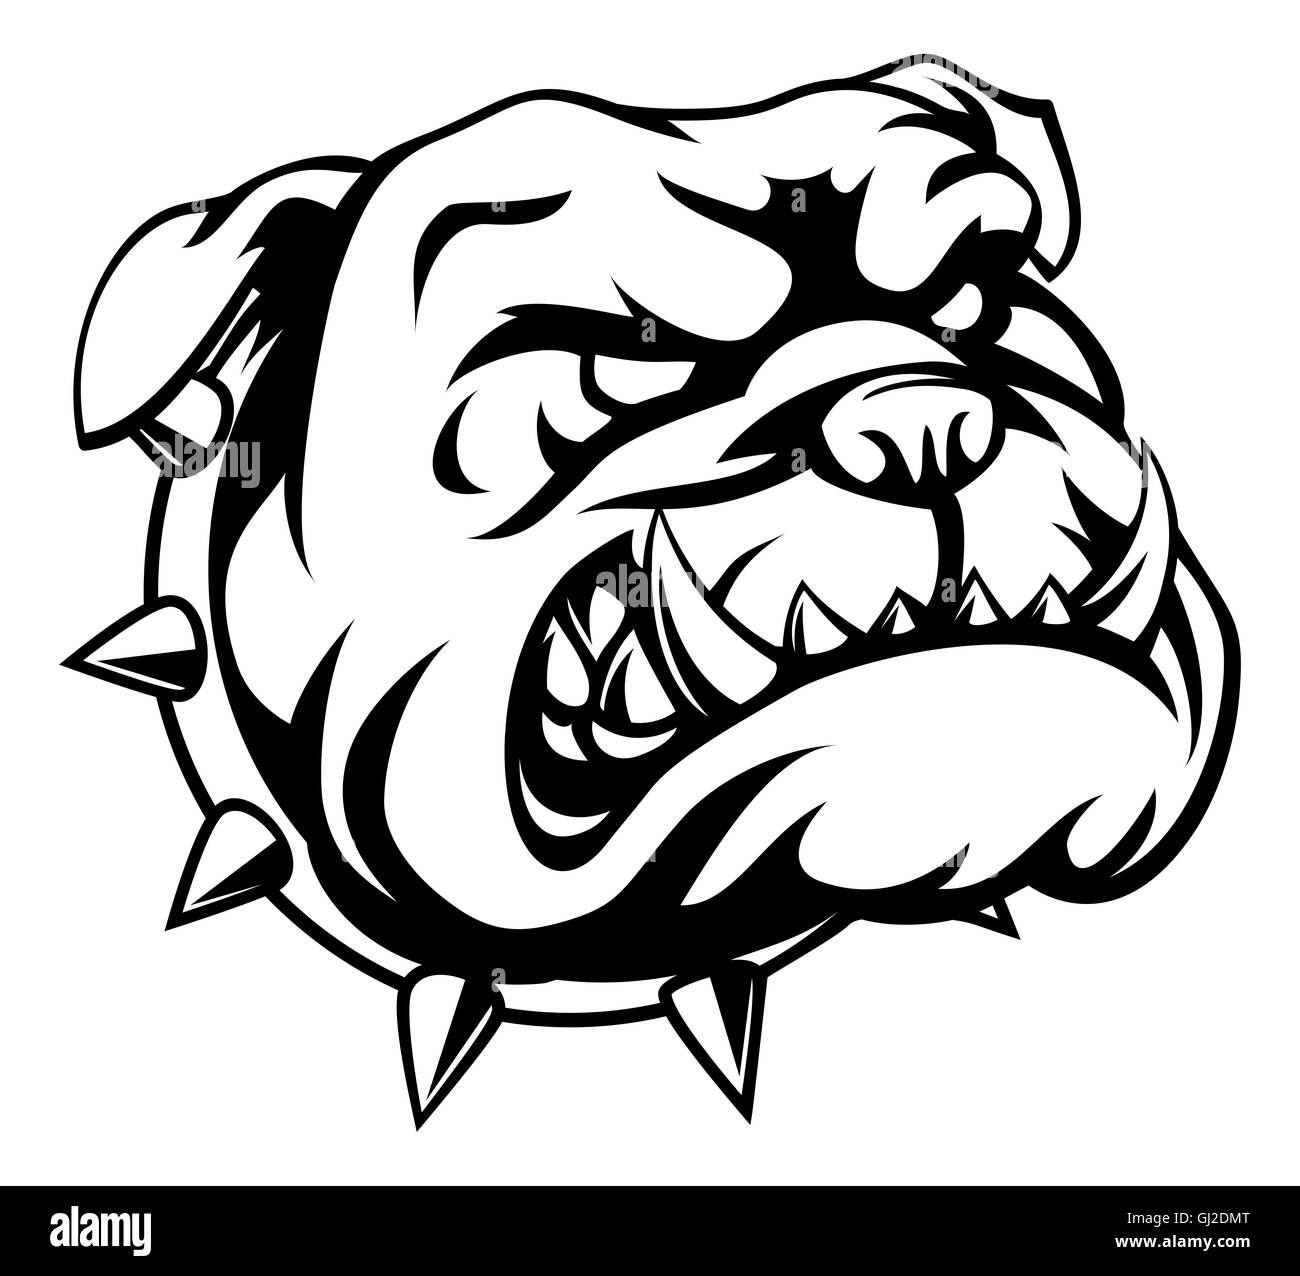 Cartoon bulldog Black and White Stock Photos & Images - Alamy